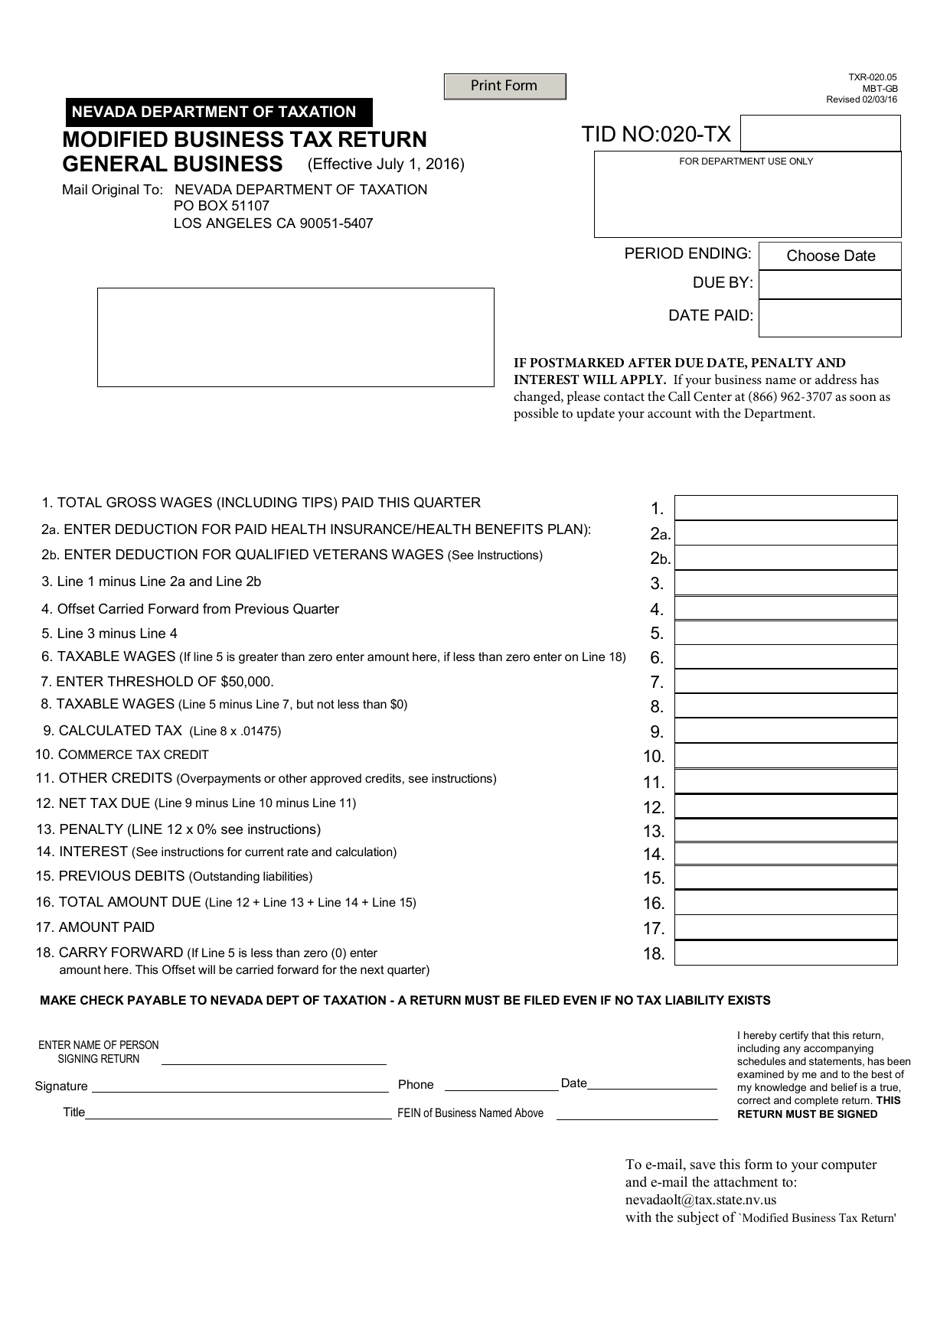 Form TXR-020.05 Modified Business Tax Return - General Business - Nevada, Page 1